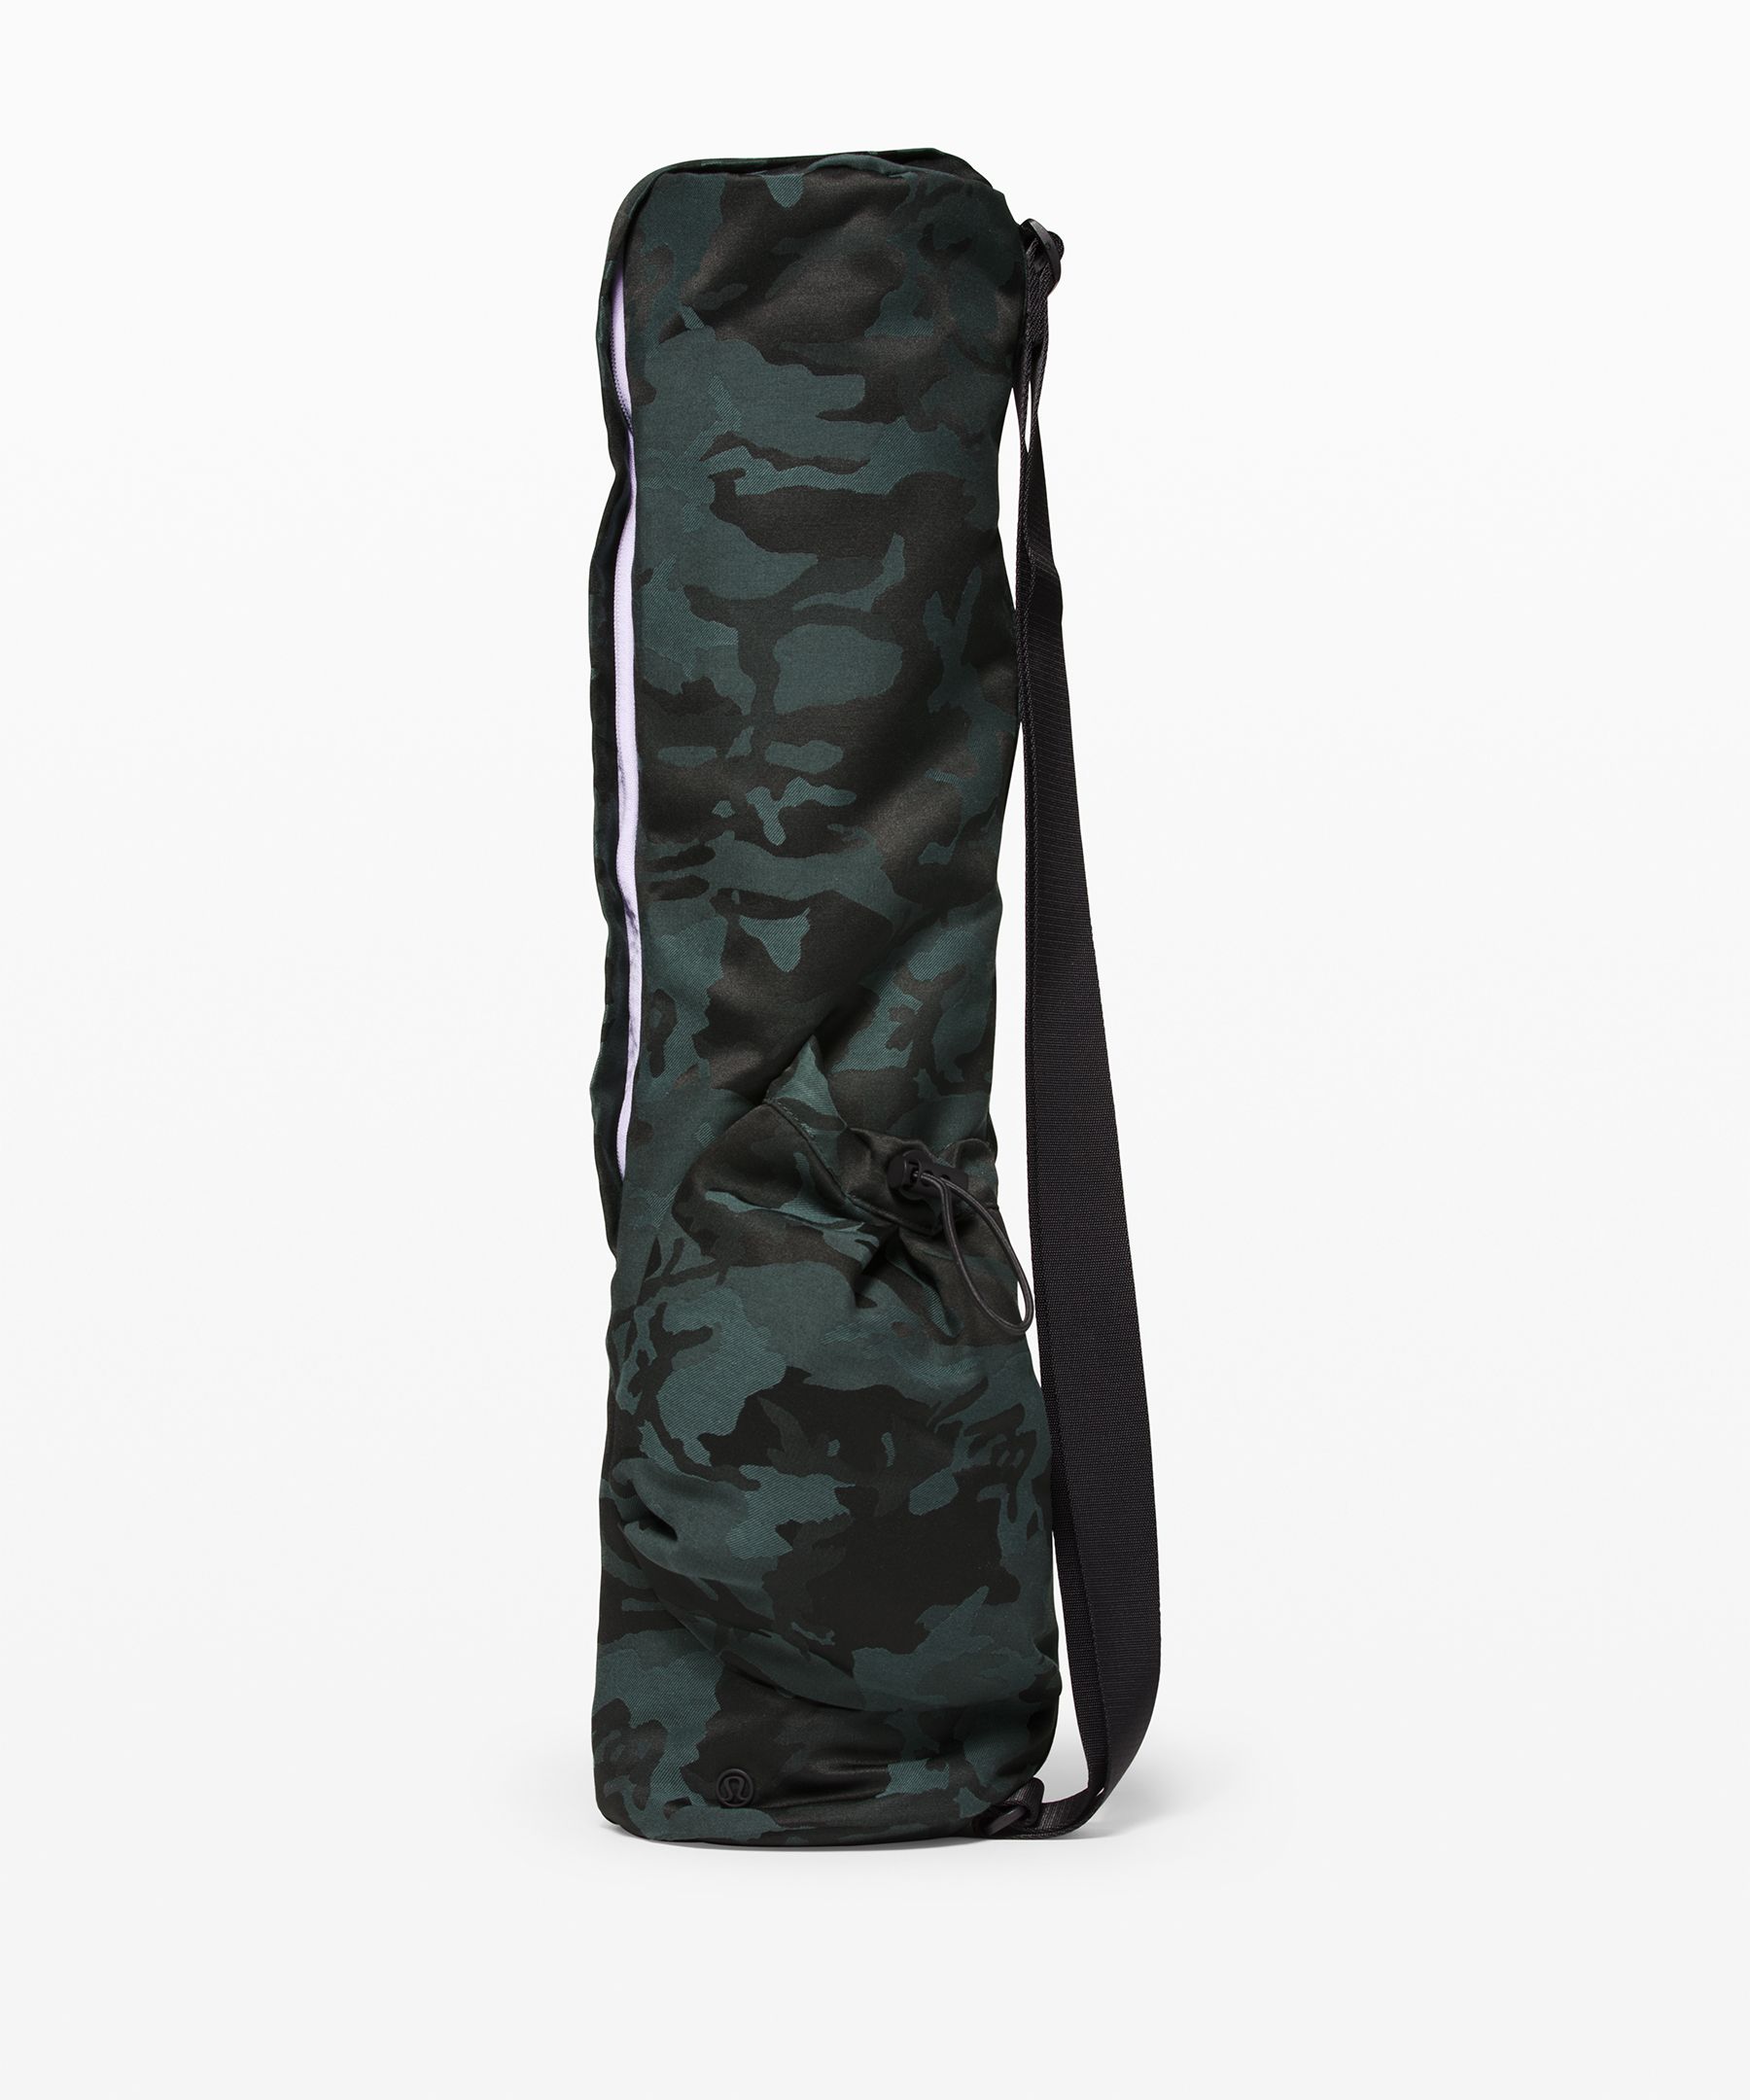 Lululemon The Yoga Mat Bag *16l In Jacquard Camo Cotton Obsidian/black